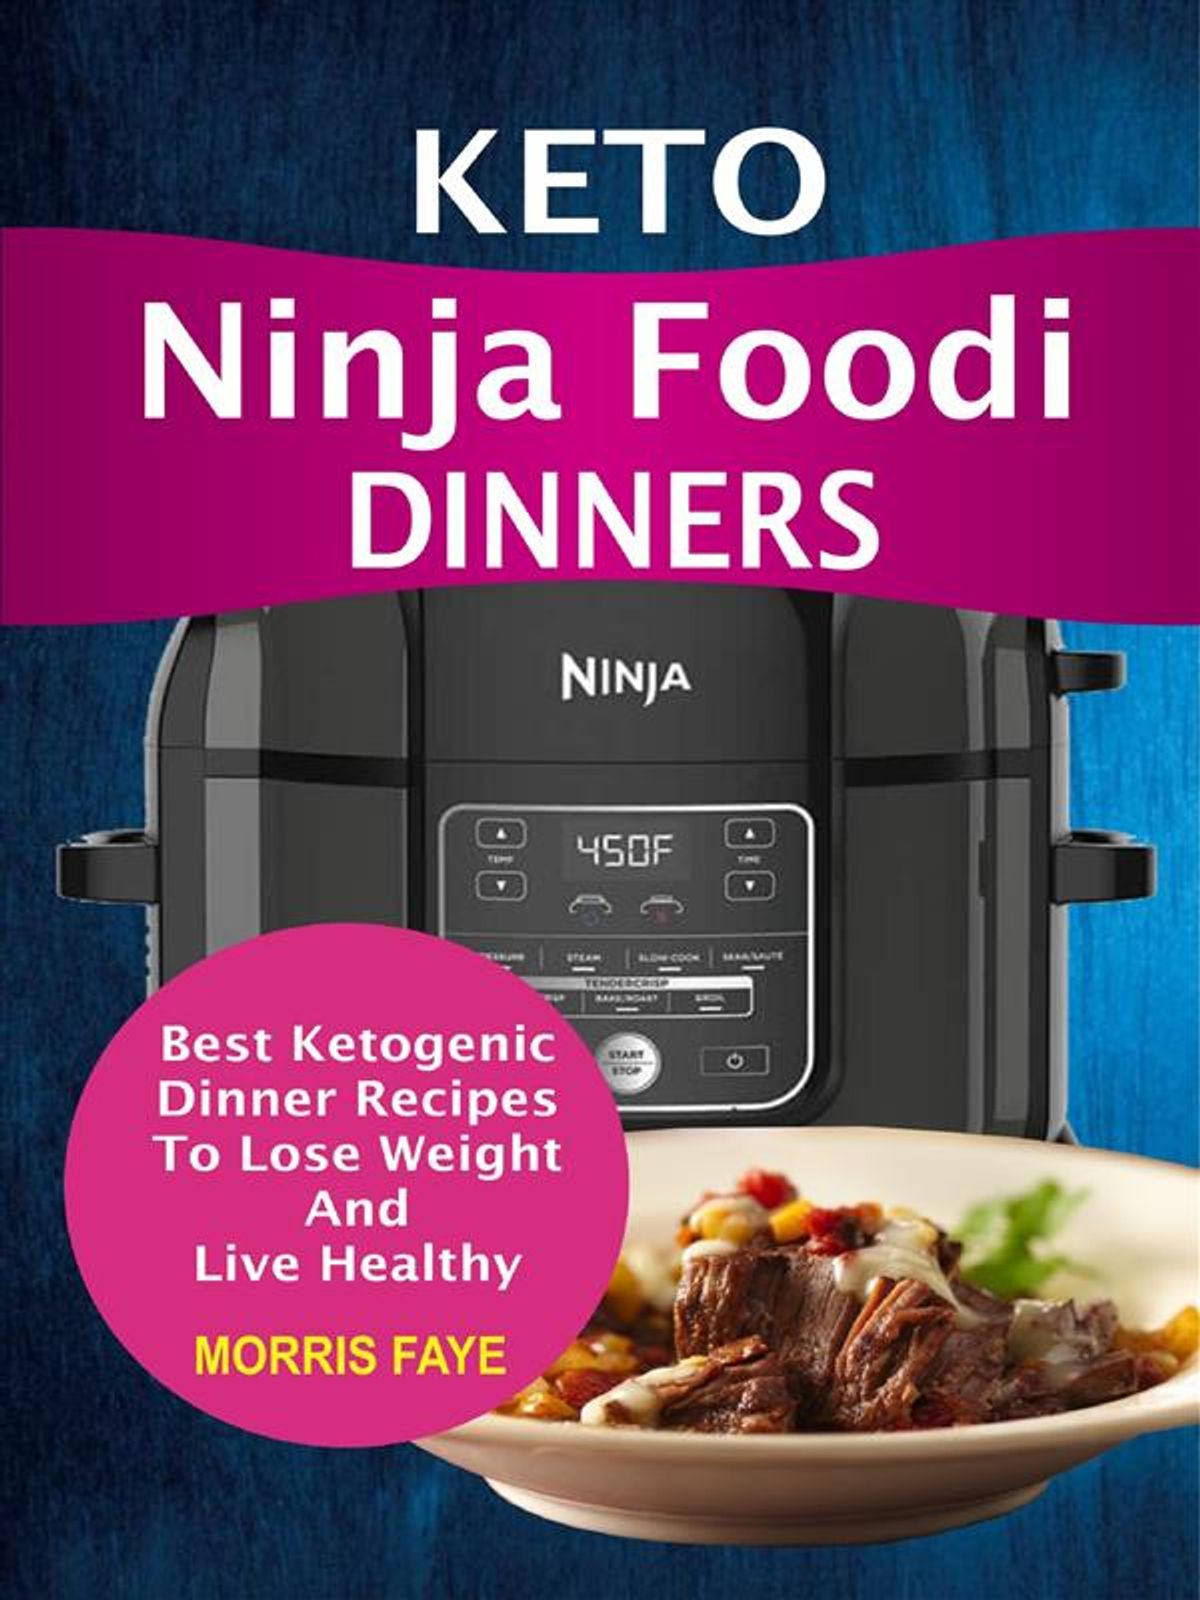 Ninja Foodi Keto Recipes
 Keto Ninja Foodi Dinners Best Ketogenic Dinner Recipes To